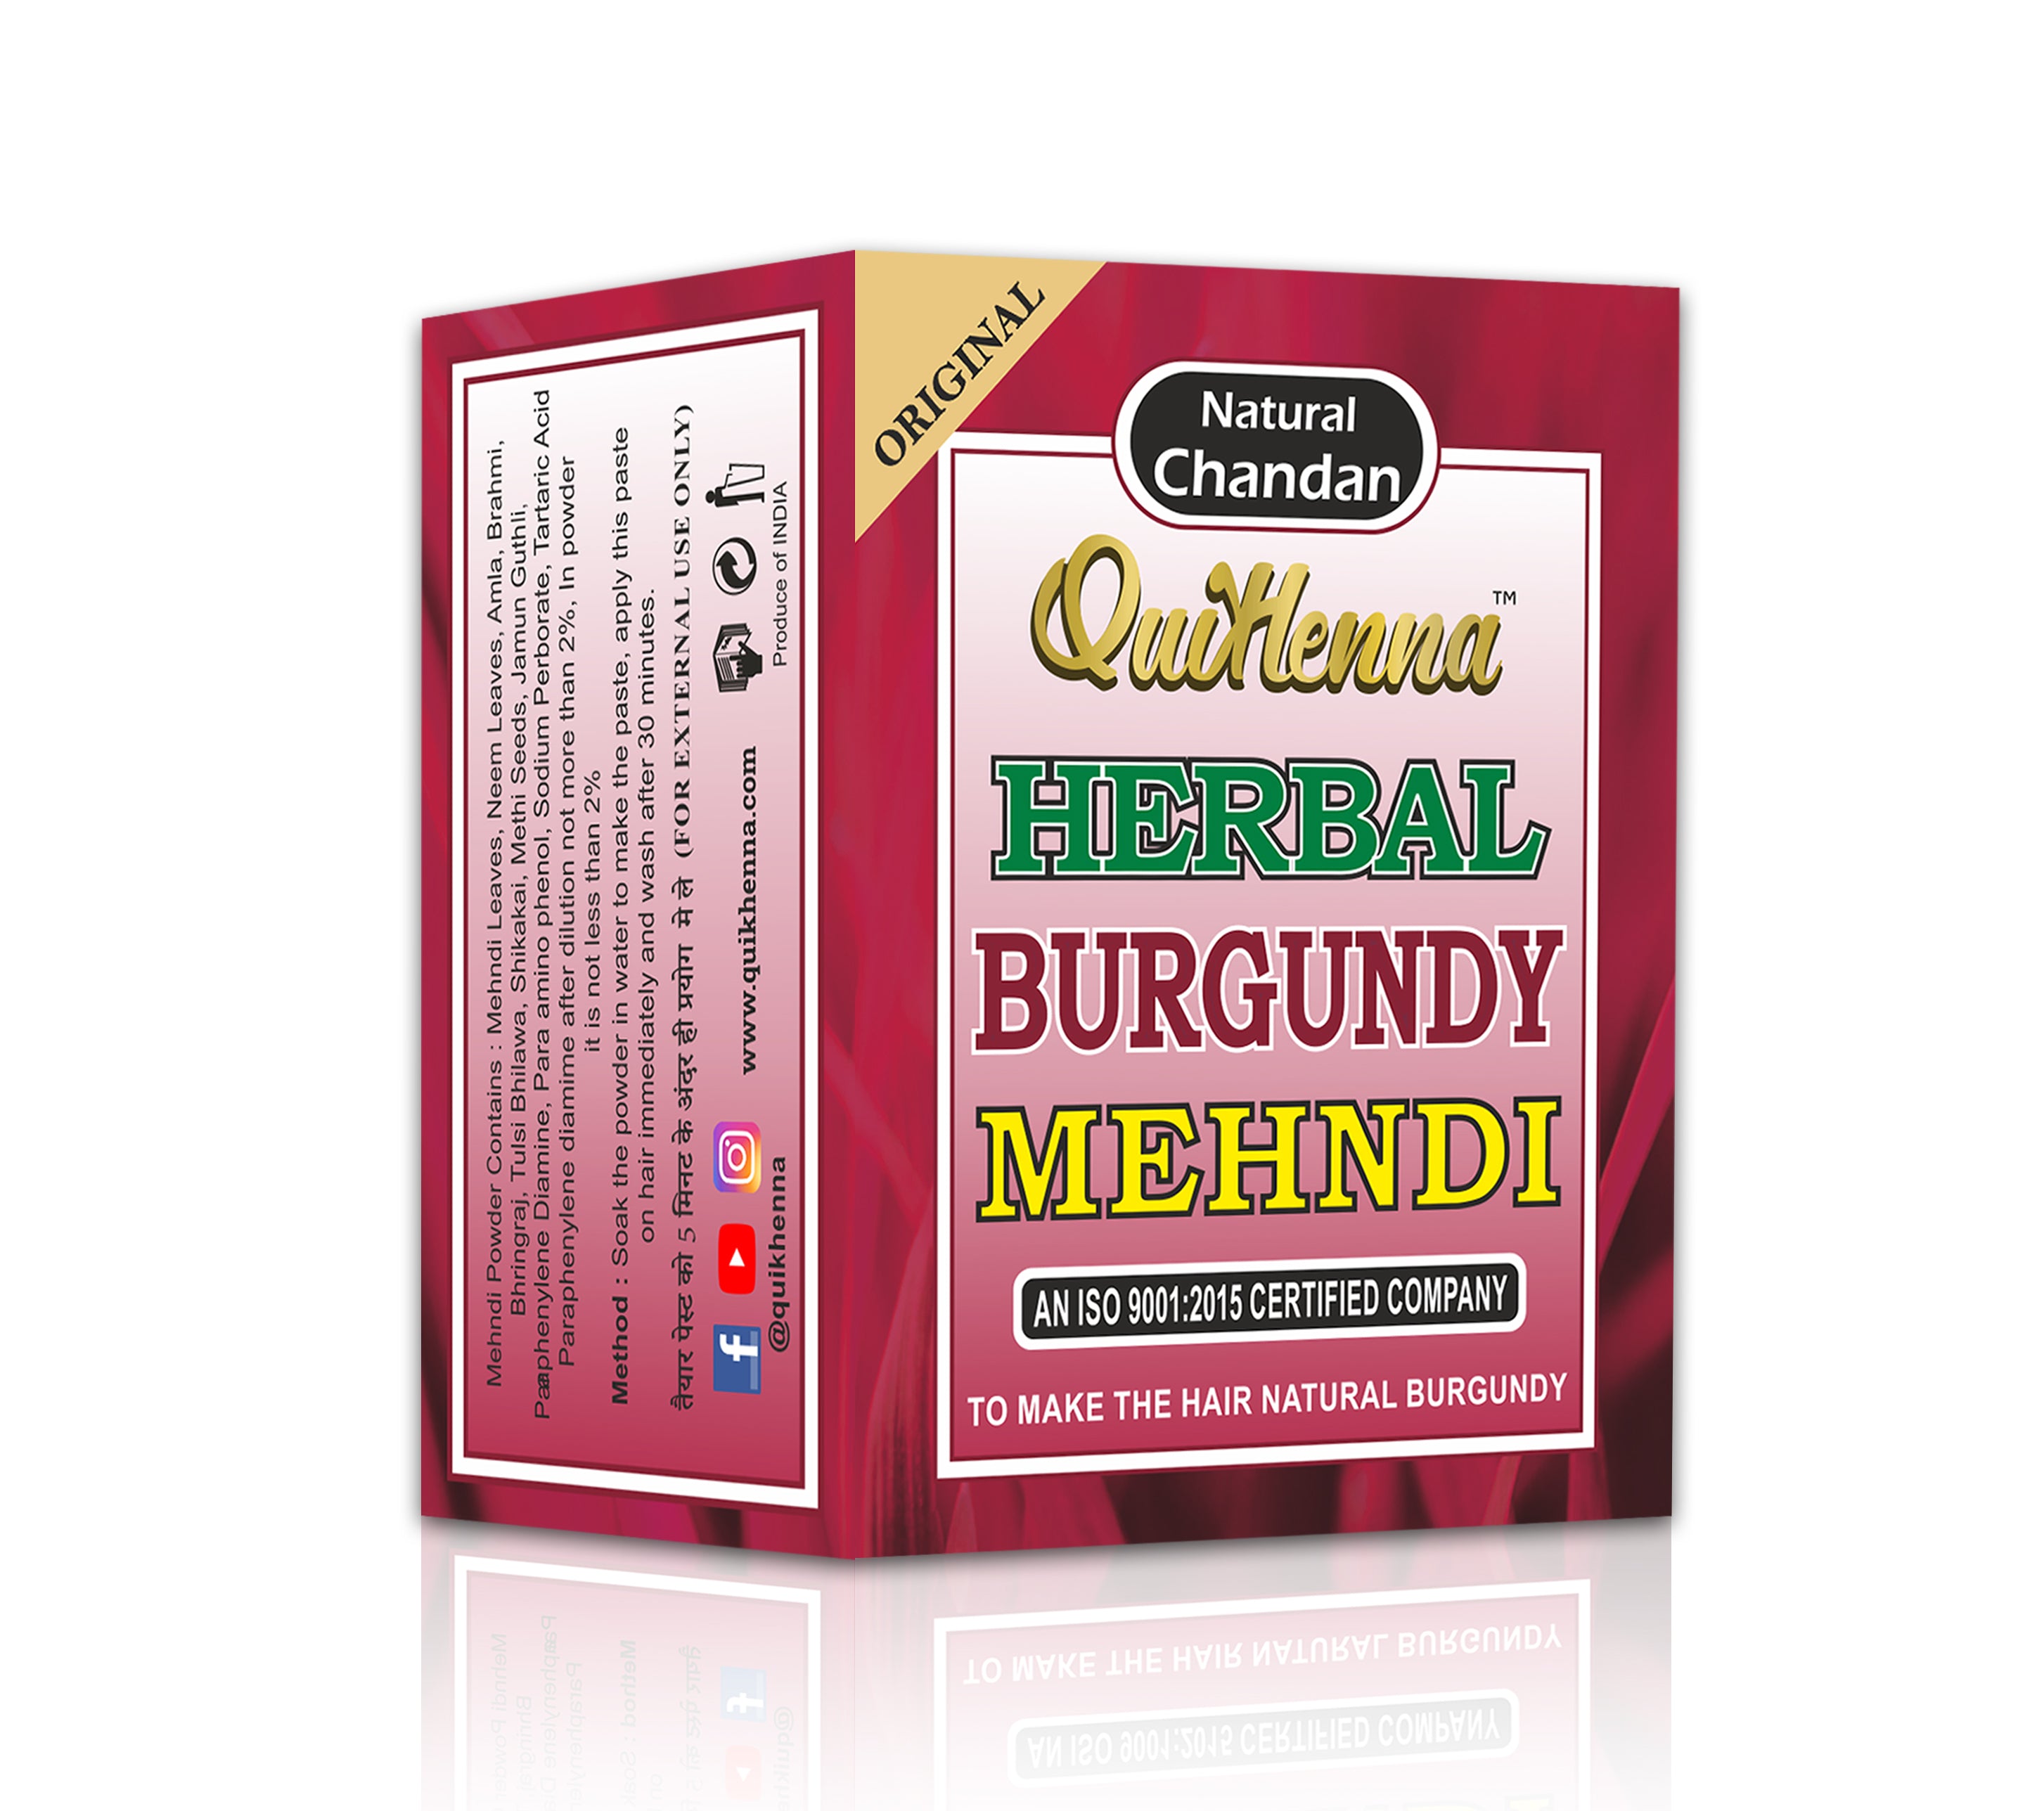 QuikHenna Herbal Burgundy Mehndi for Men and Women 65gm (Pack of 8)100% Grey Coverage